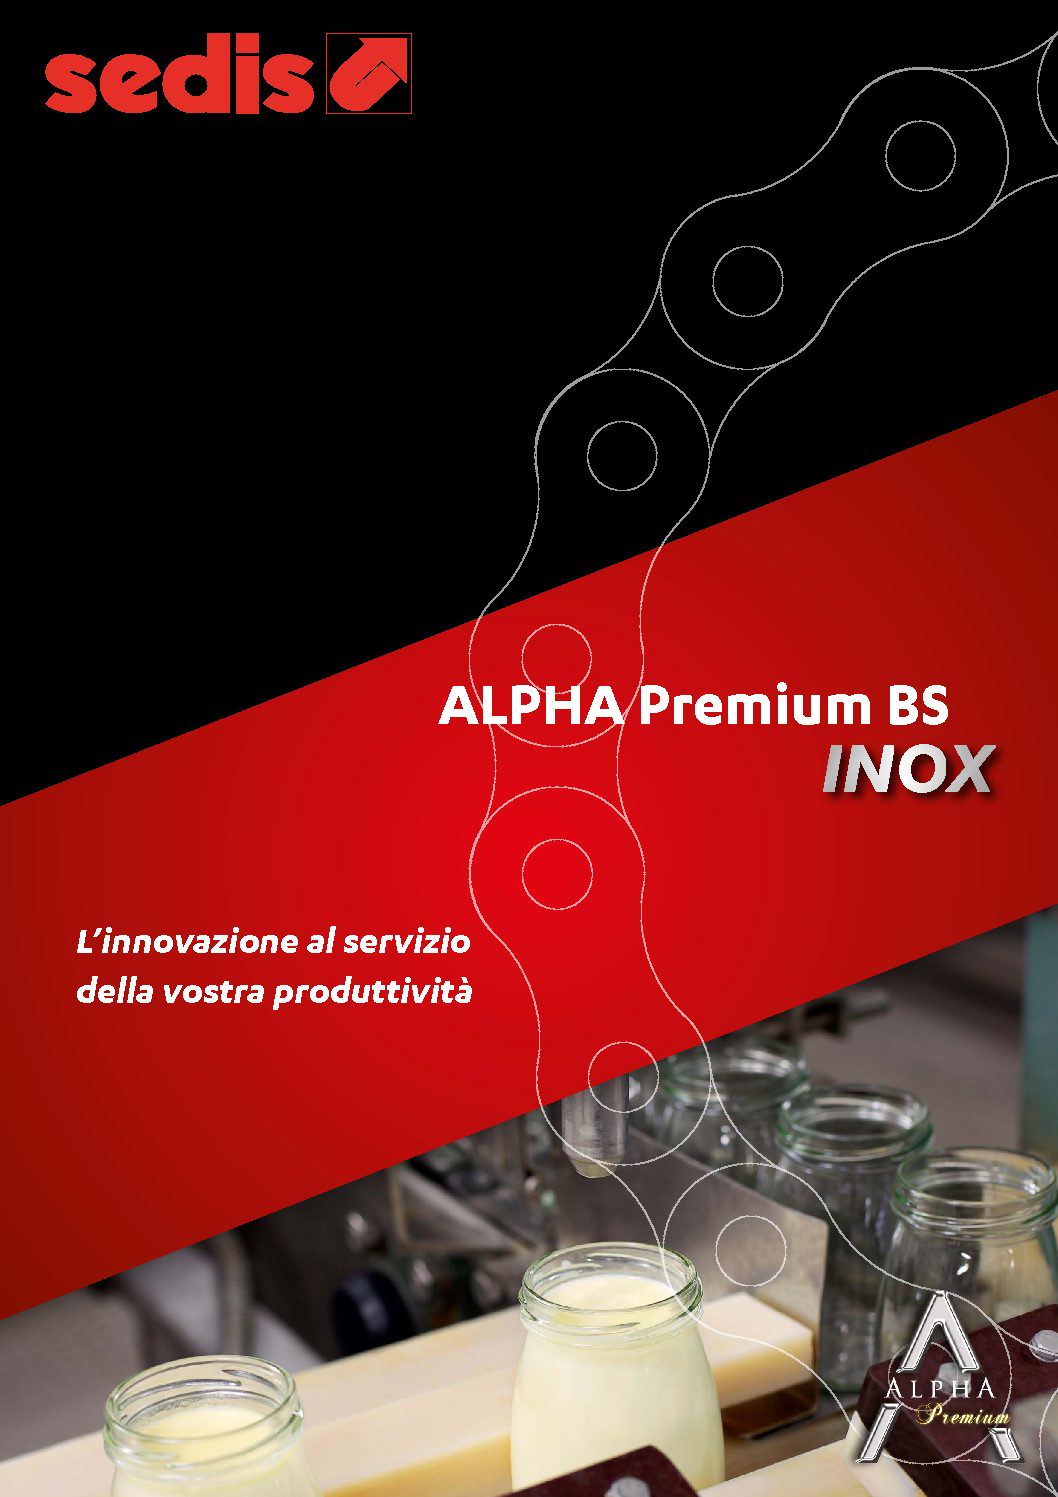 sedis-alpha-premium-bs-inox-it